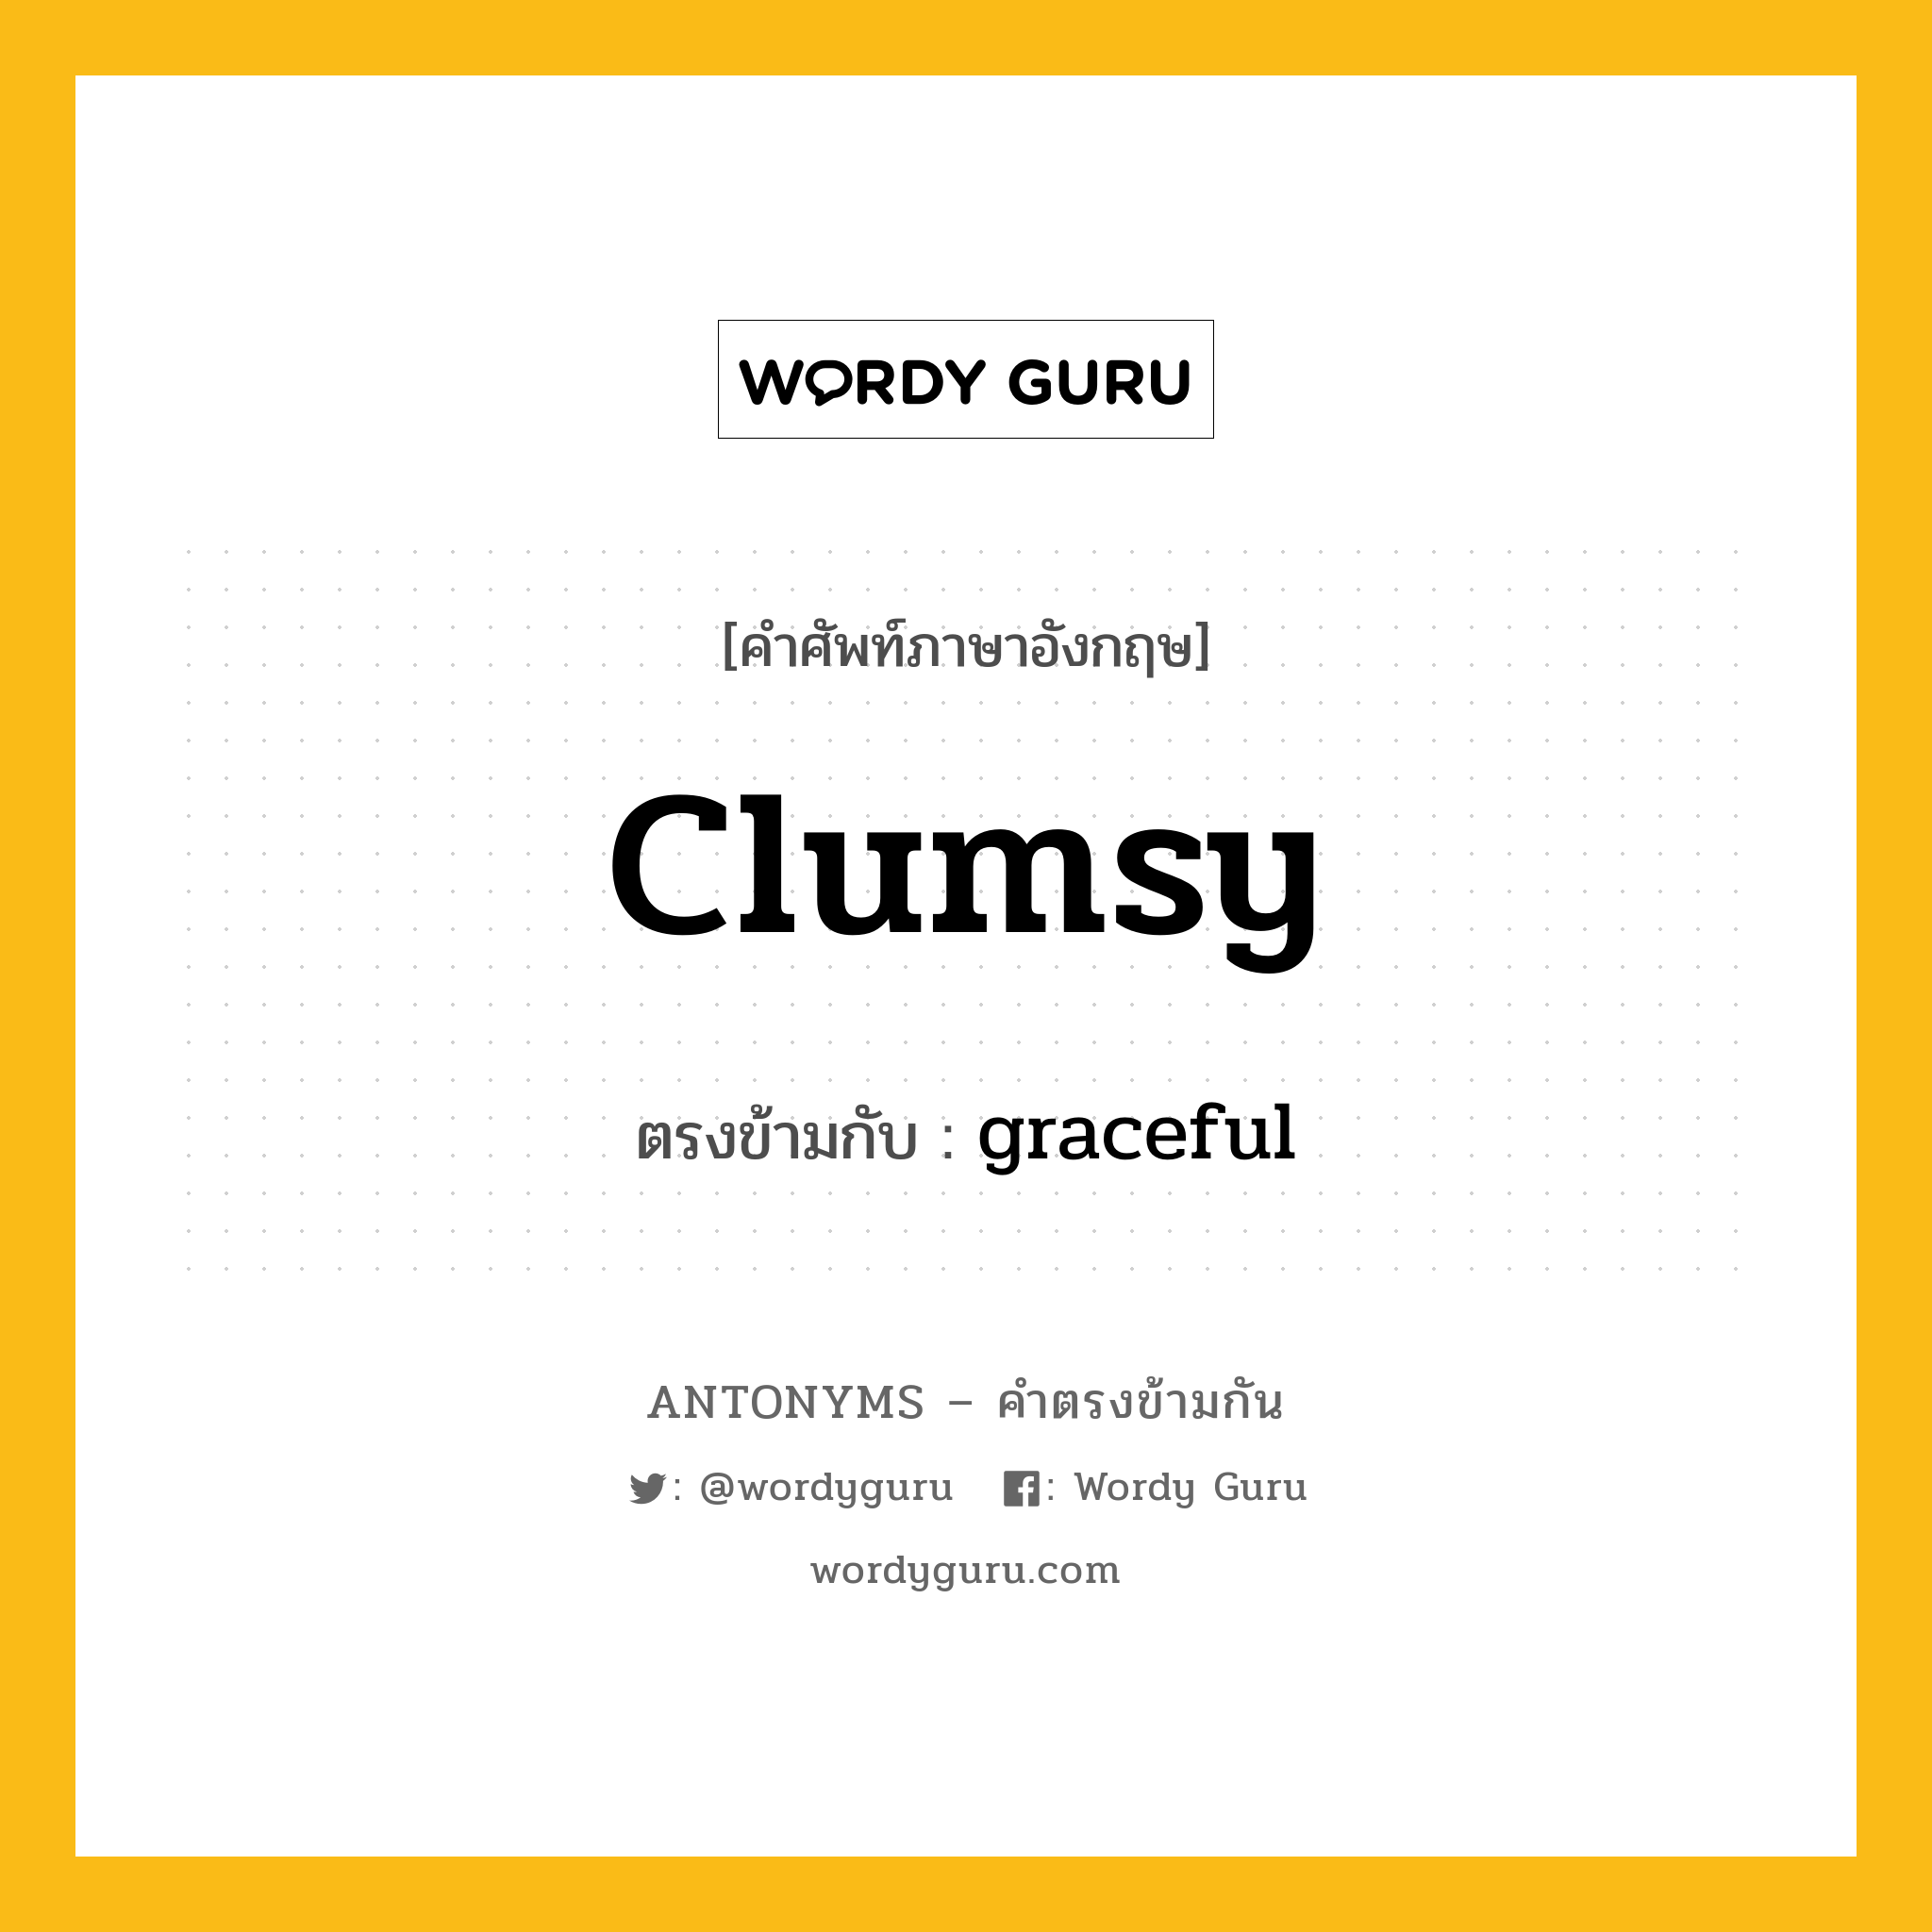 clumsy เป็นคำตรงข้ามกับคำไหนบ้าง?, คำศัพท์ภาษาอังกฤษ clumsy ตรงข้ามกับ graceful หมวด graceful